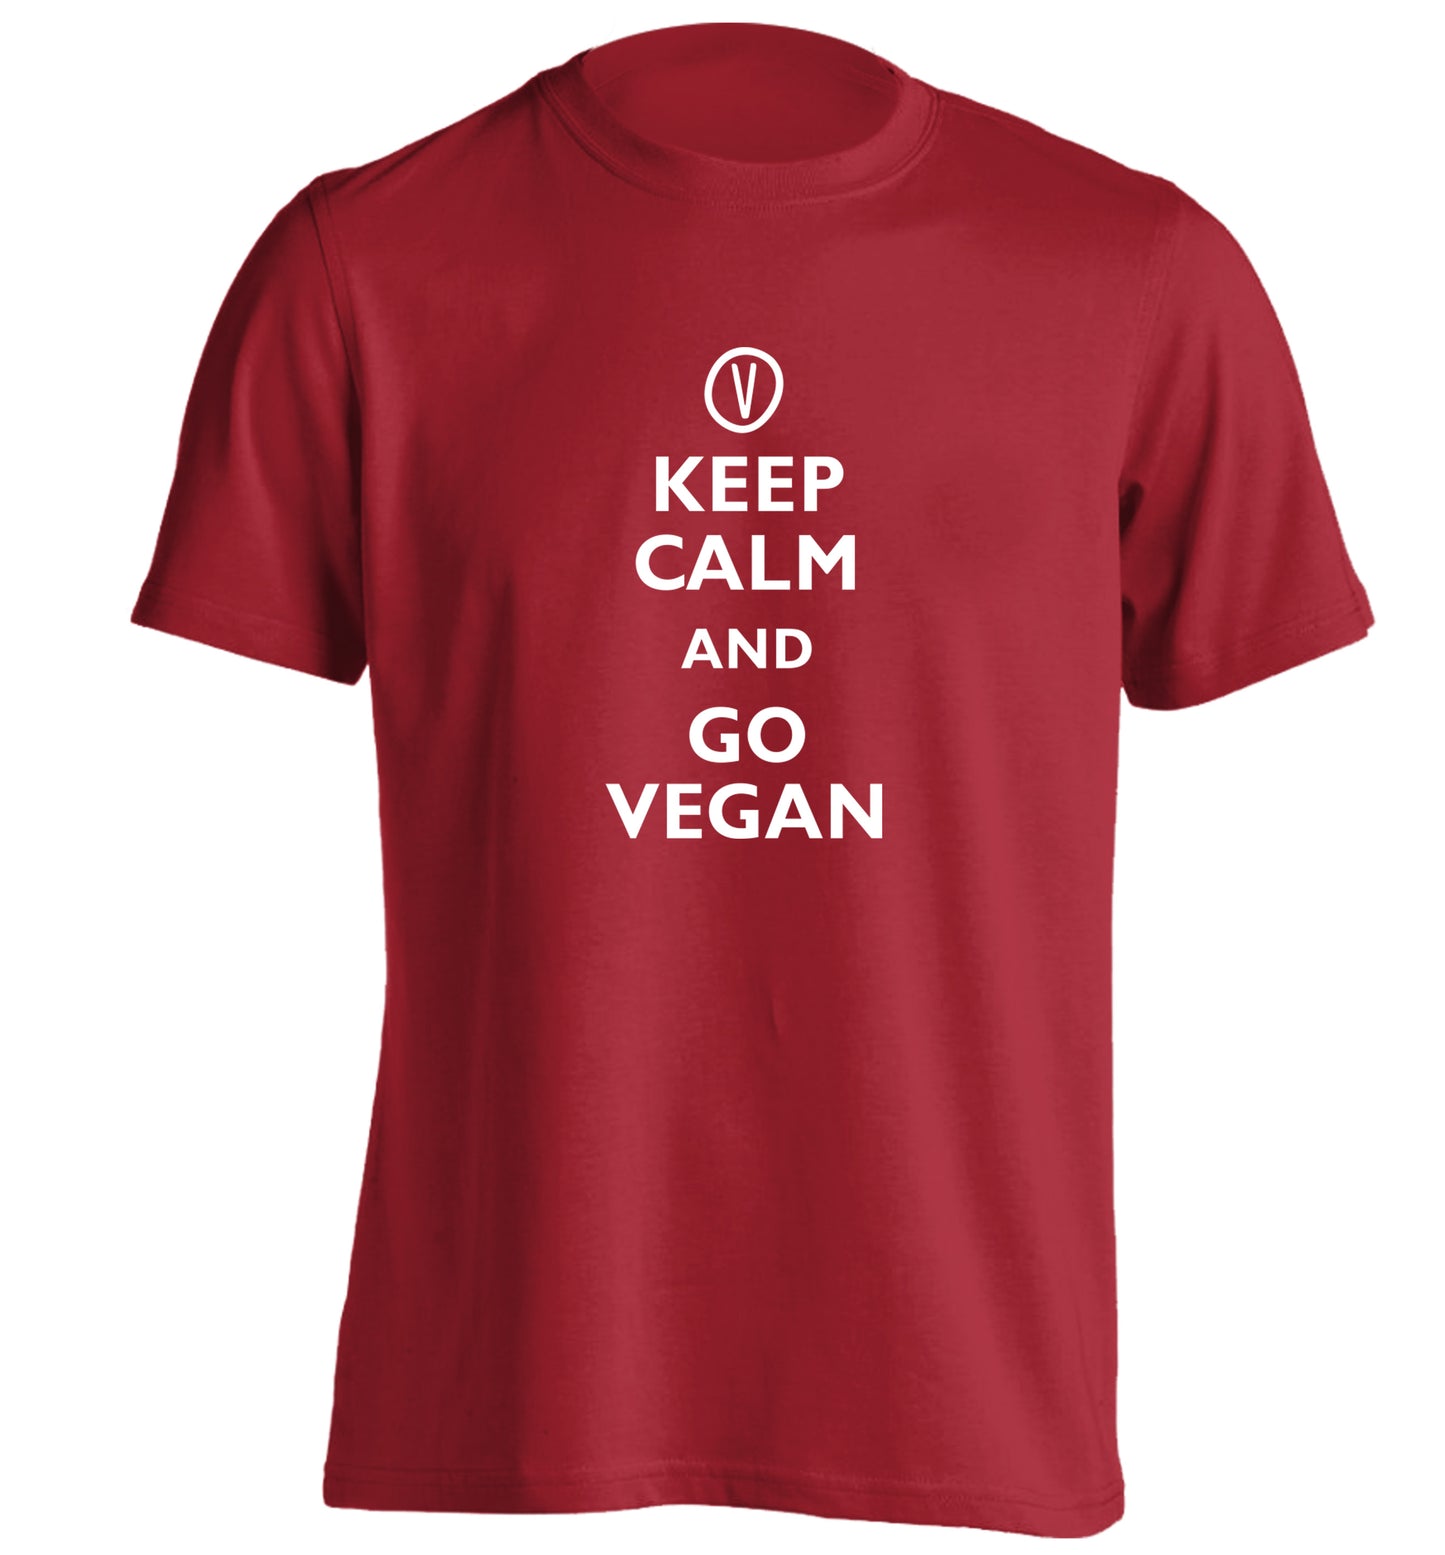 Keep calm and go vegan adults unisex red Tshirt 2XL